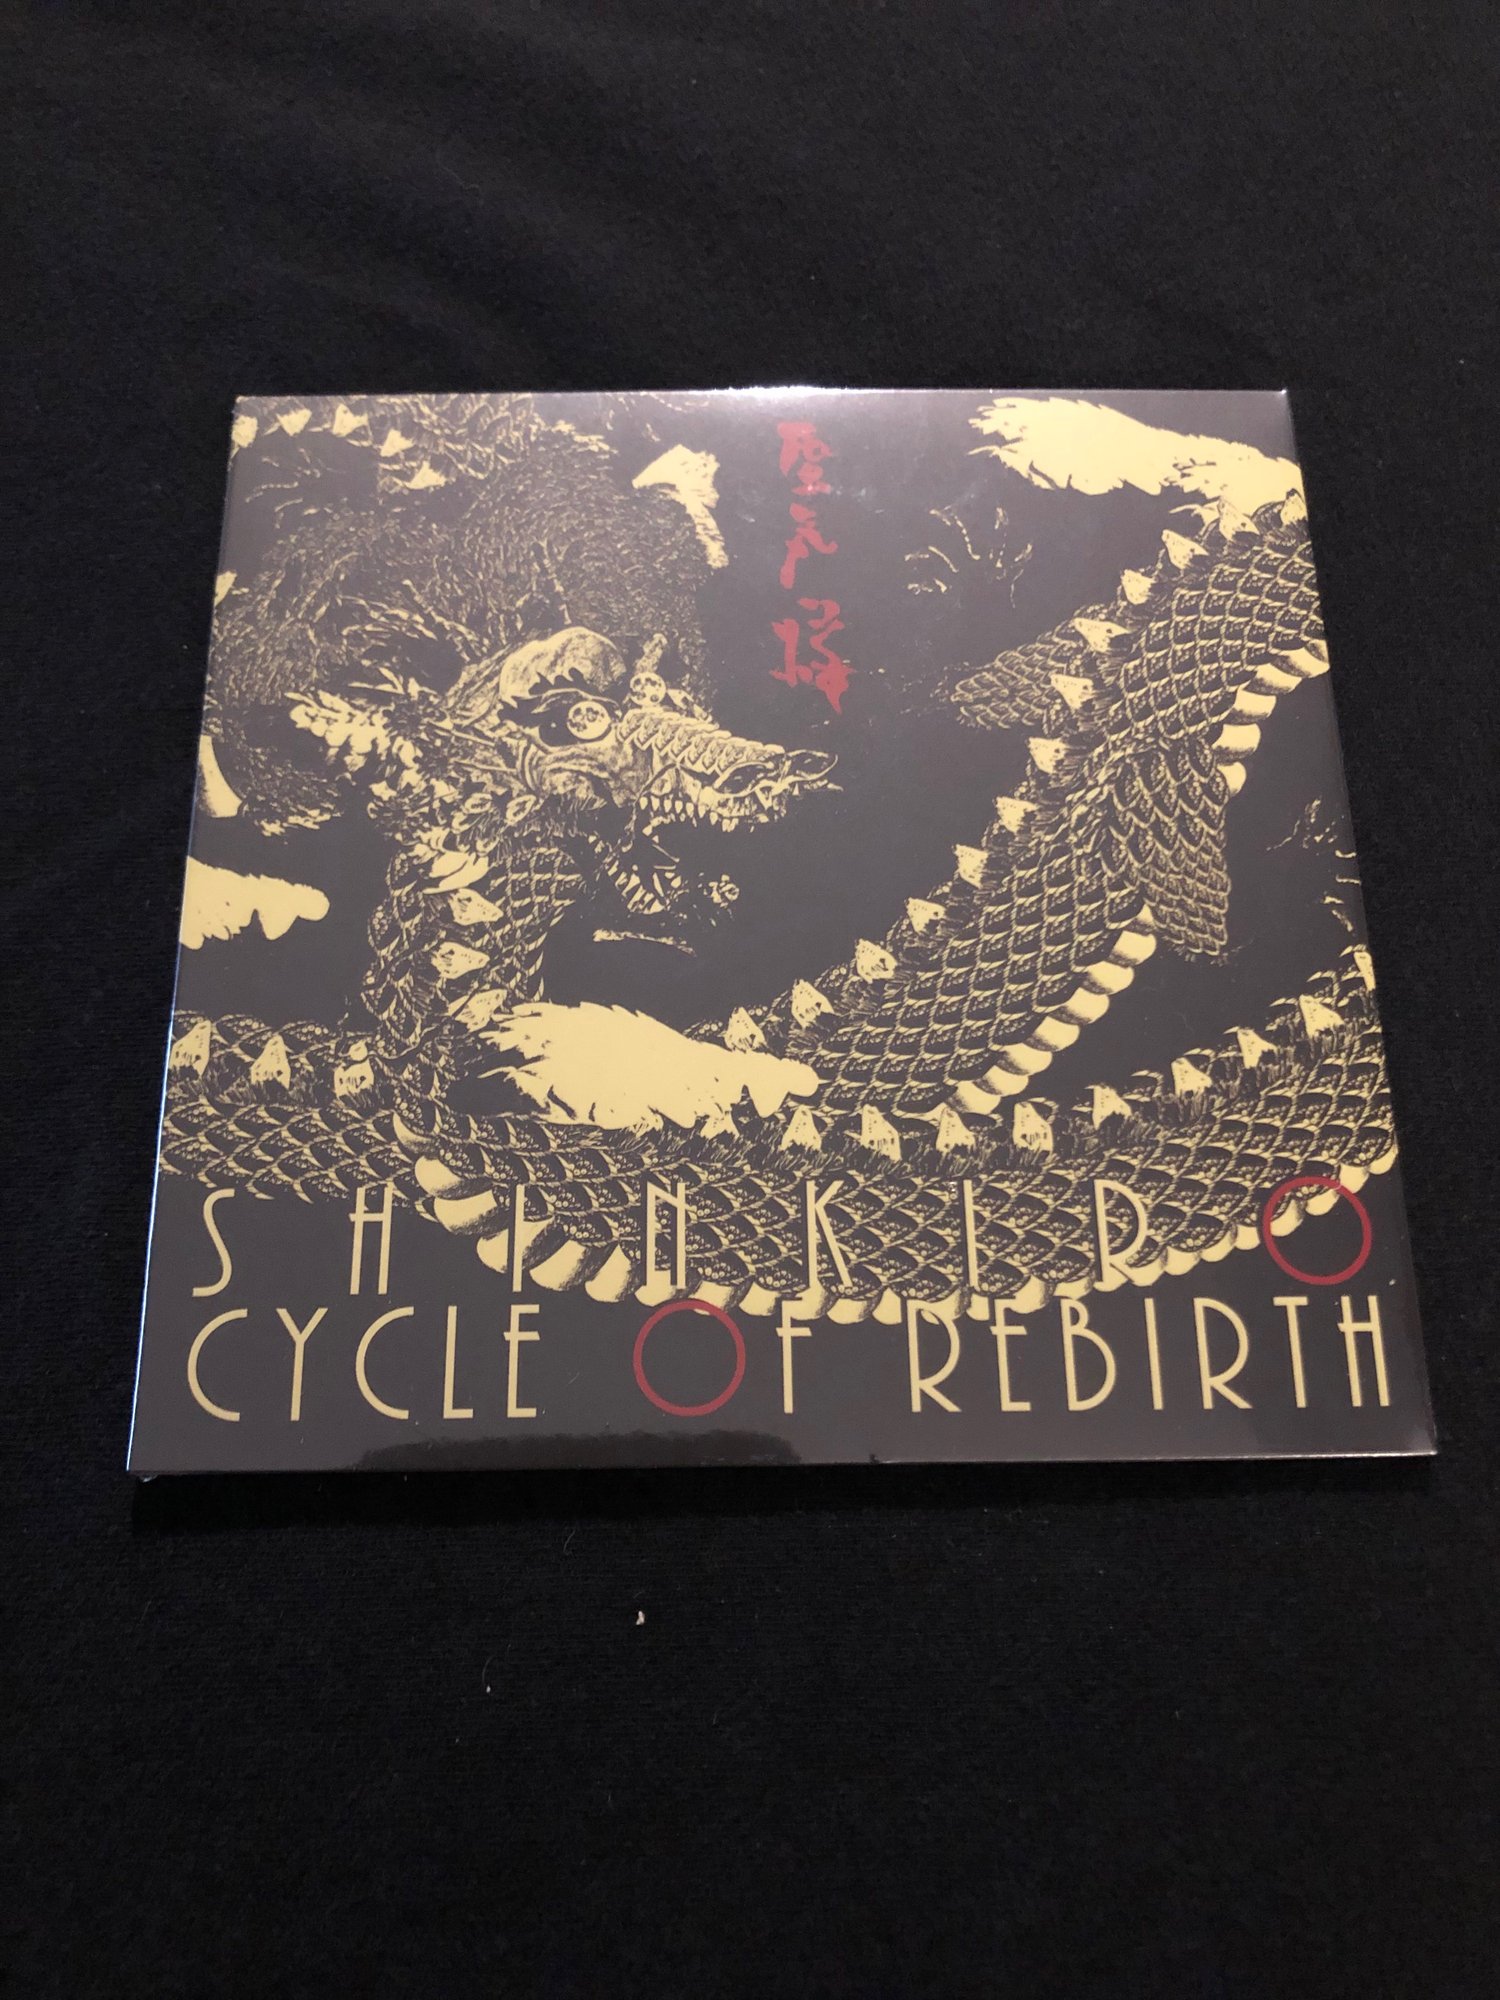 Shinkiro - Cycle Of Rebirth CD (SSSM)